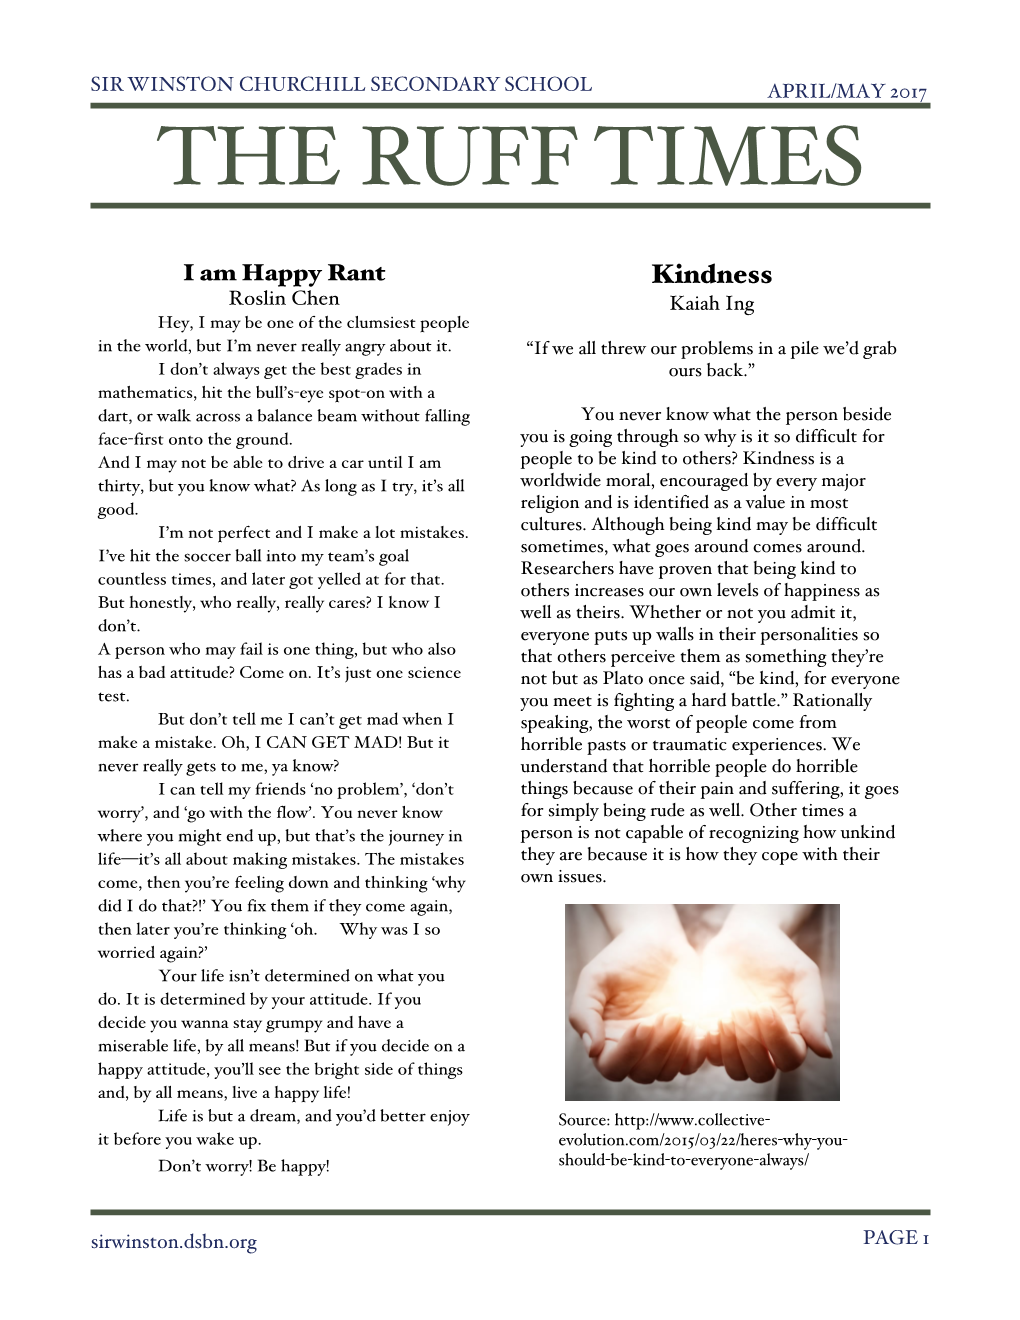 The Ruff Times